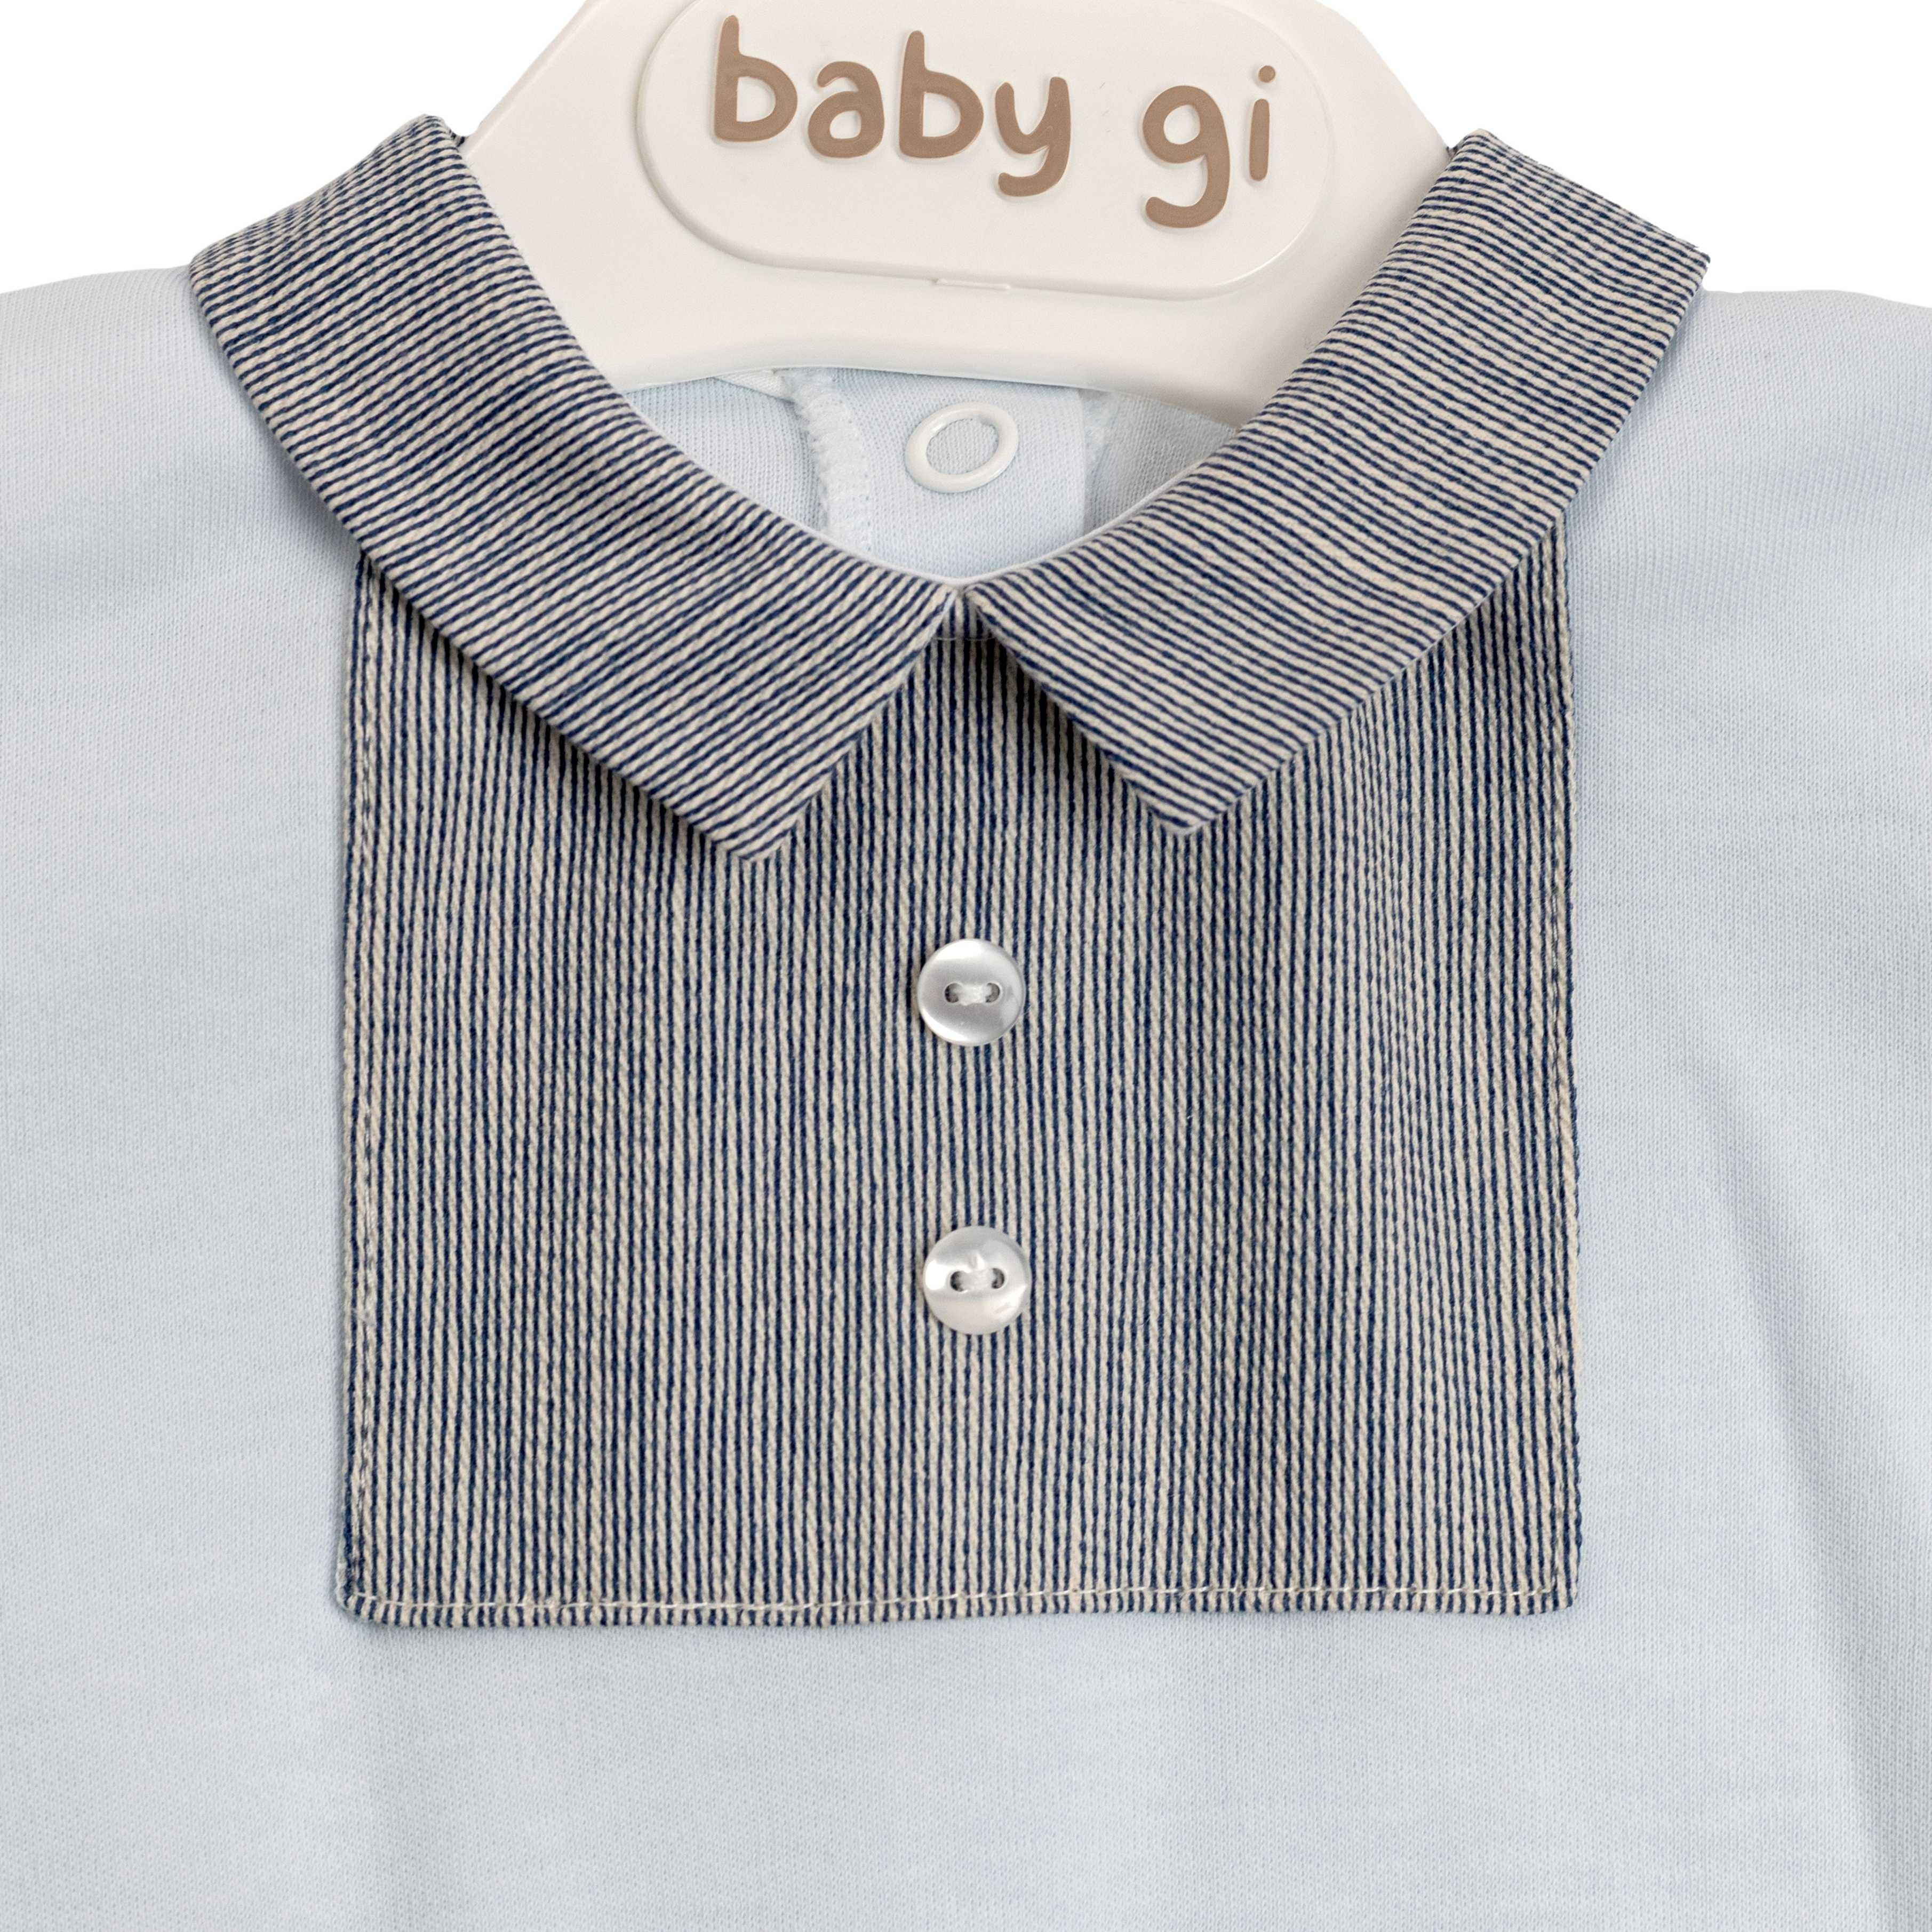 Baby Gi - Babypakje teddybeer blauw met borst detail